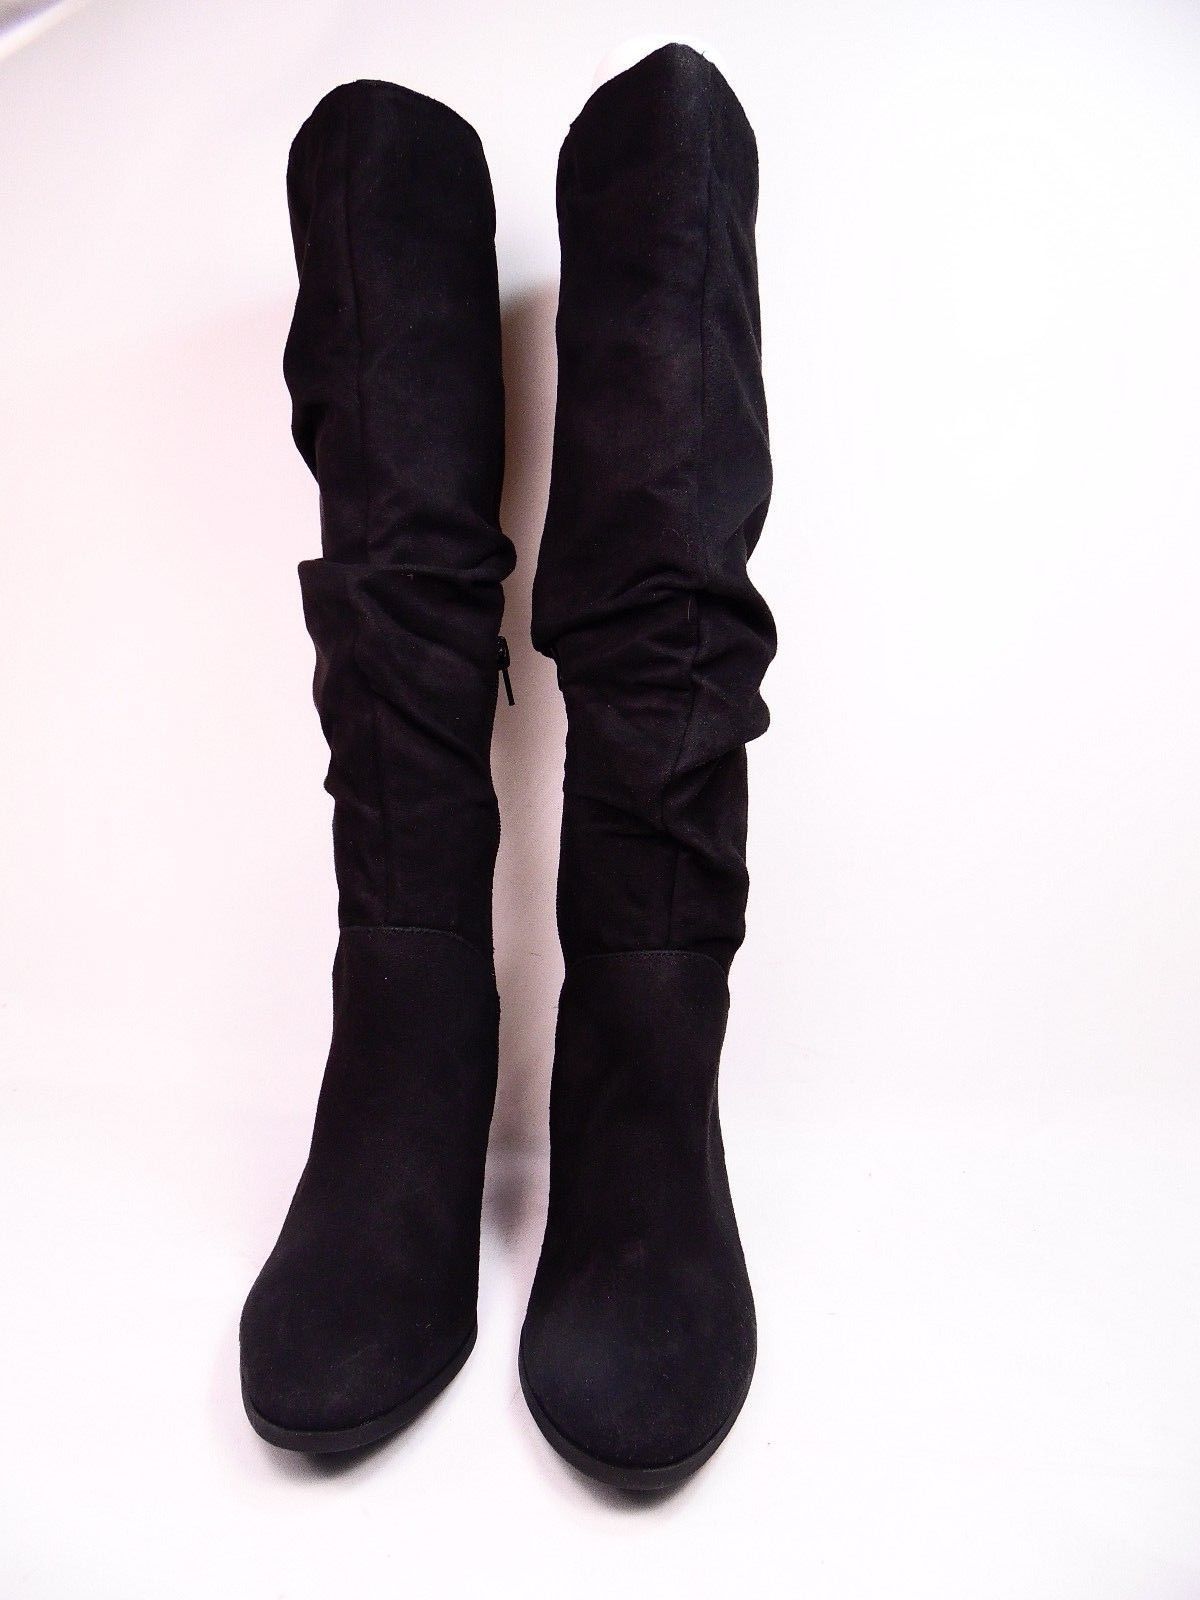 ana womens boots